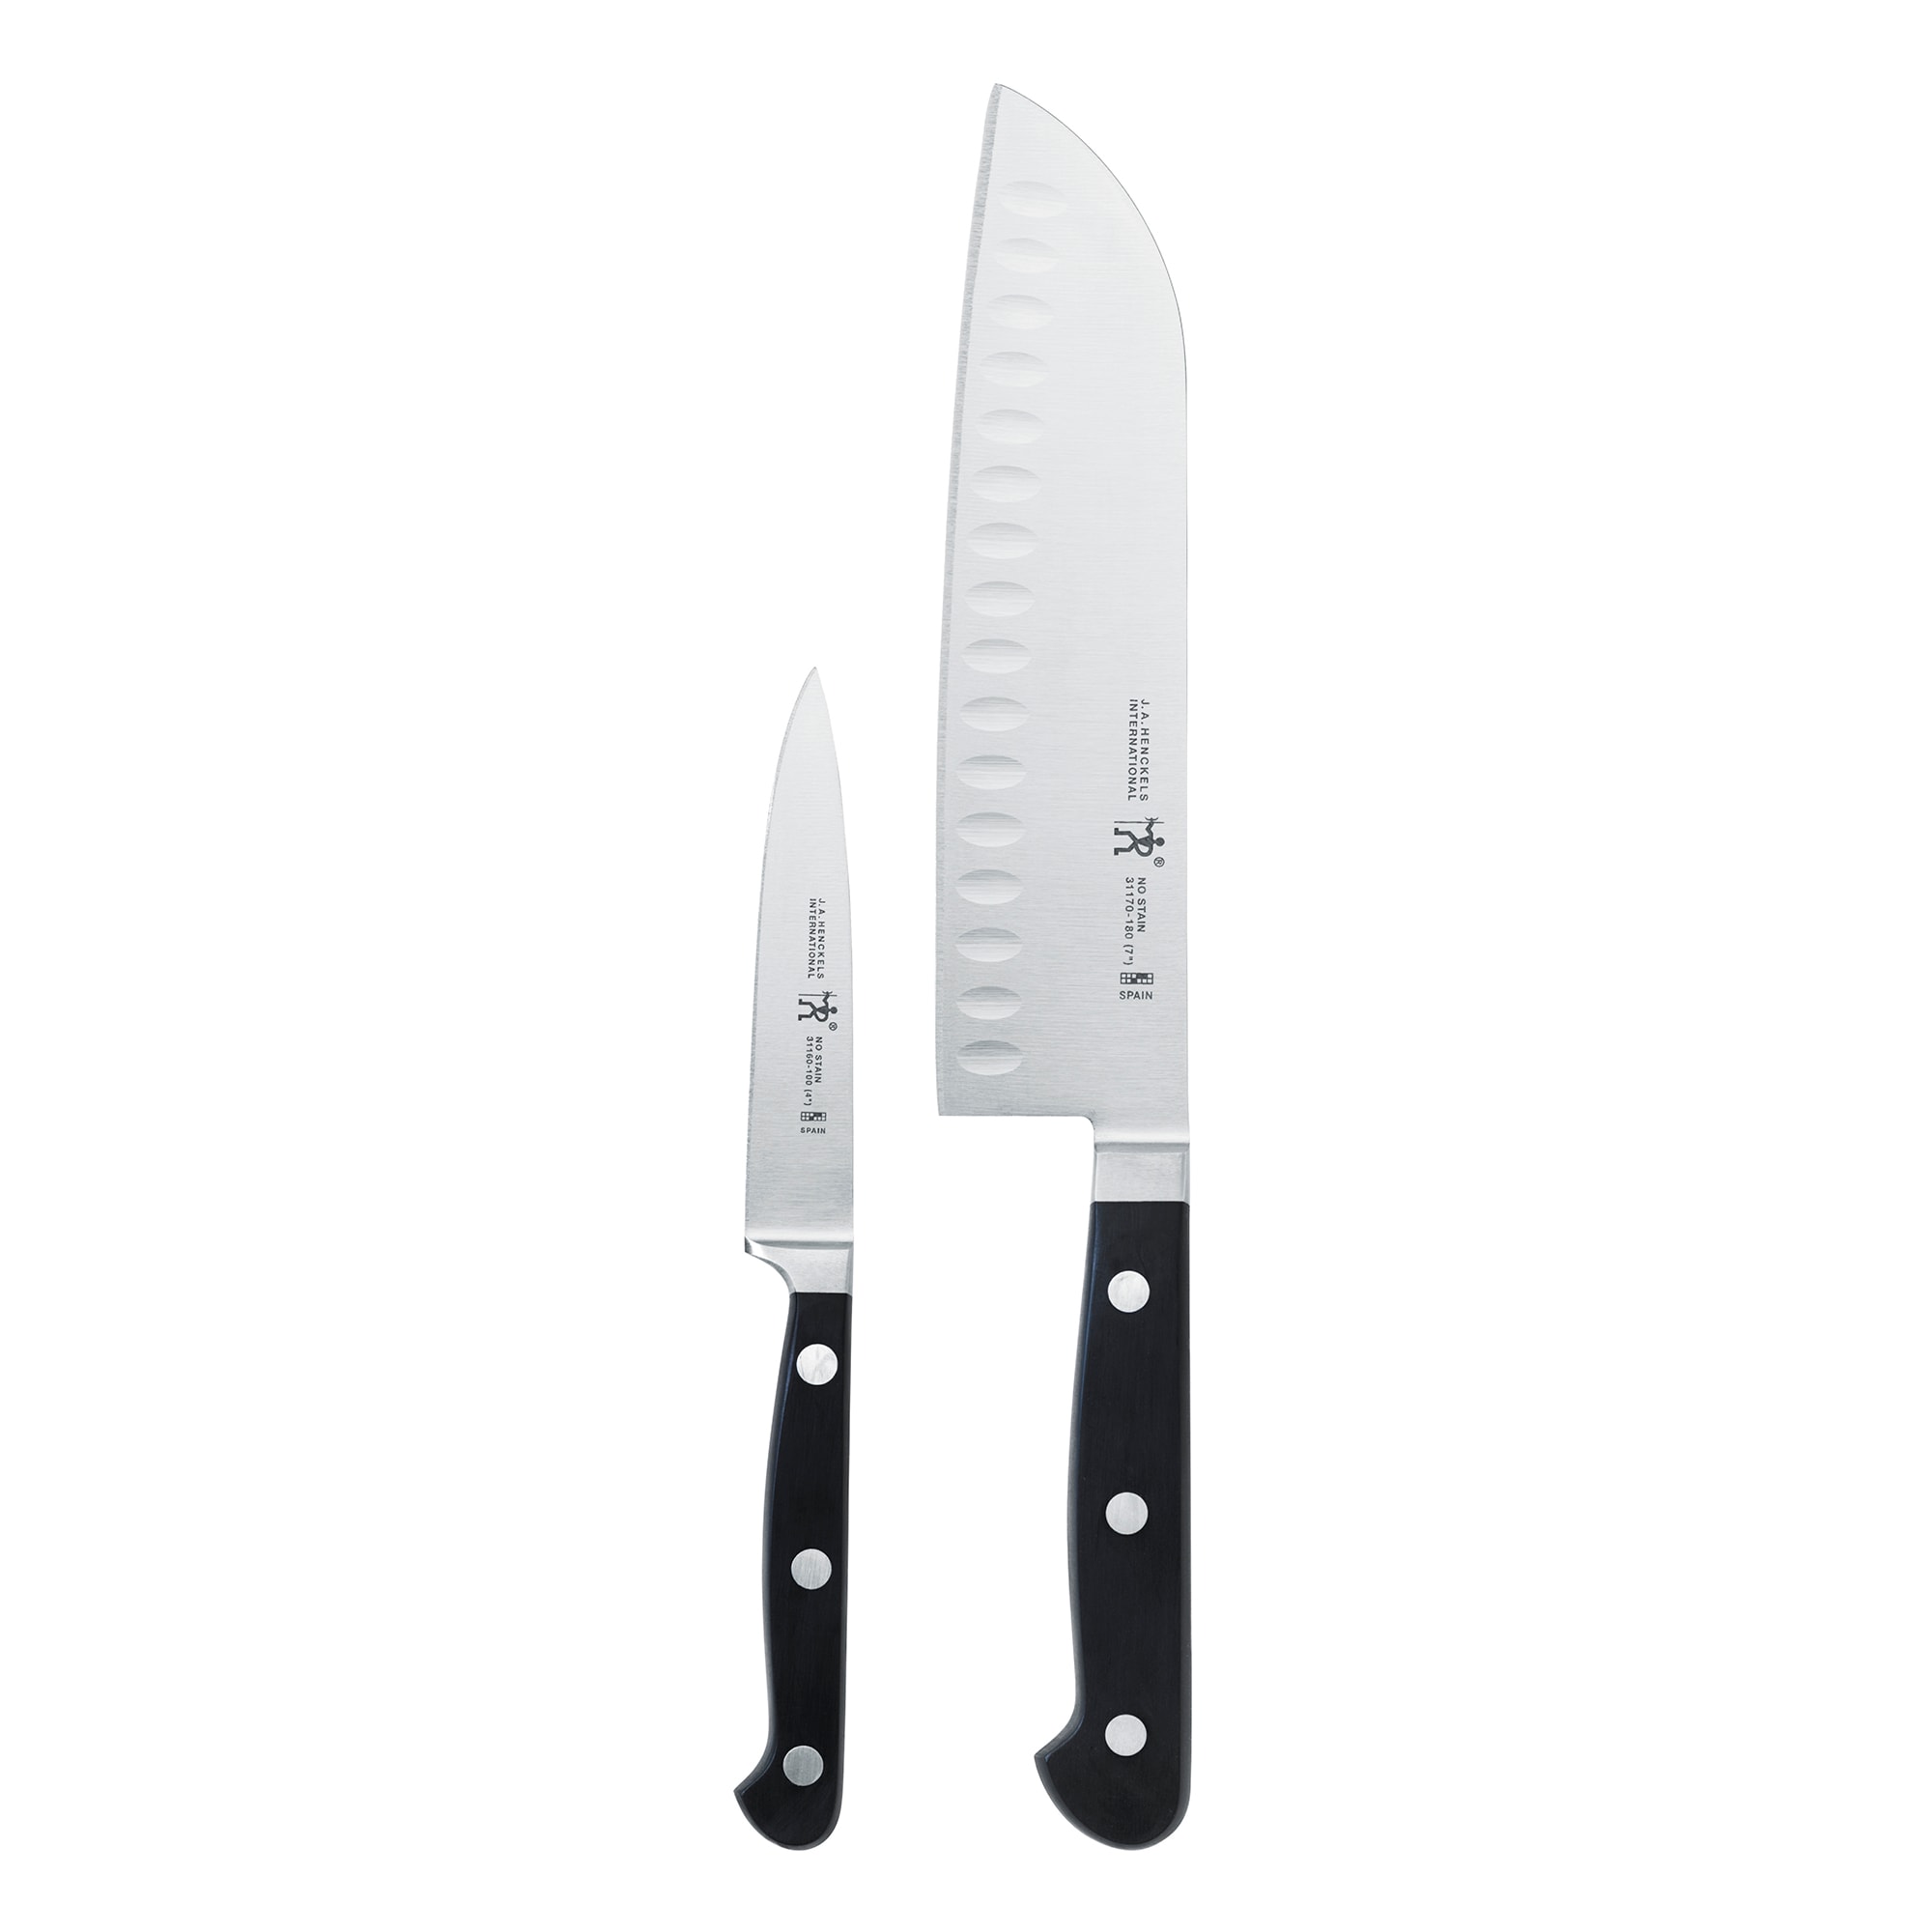 Zwilling J.A. Henckels Pro S 2-piece Carving Knife Set - Kitchen